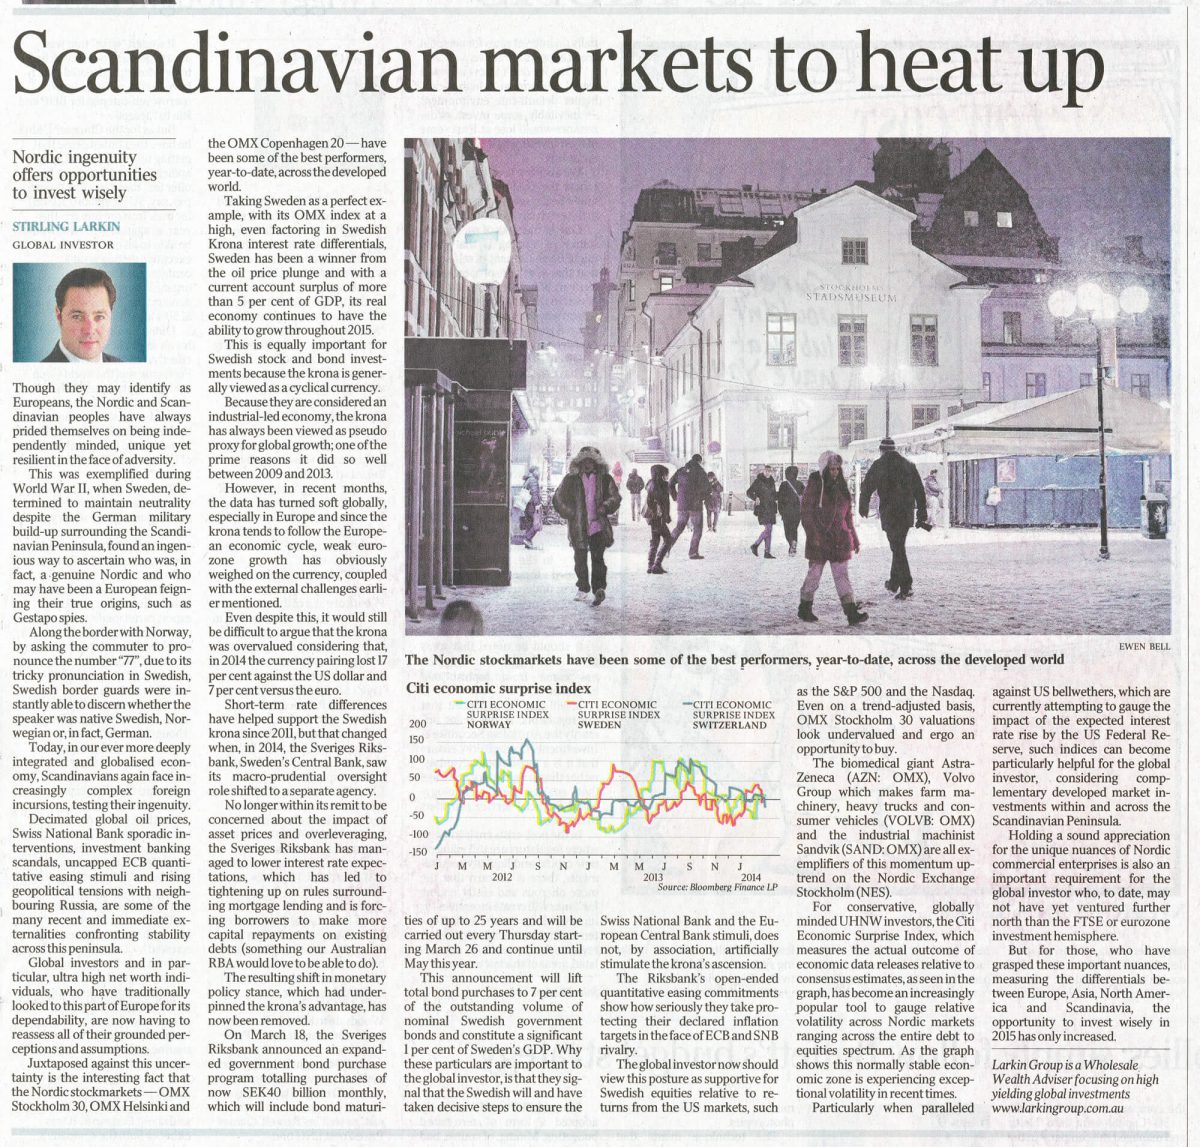 australian standfirst discusses scandinavian markets in 2015 in the australian newspaper